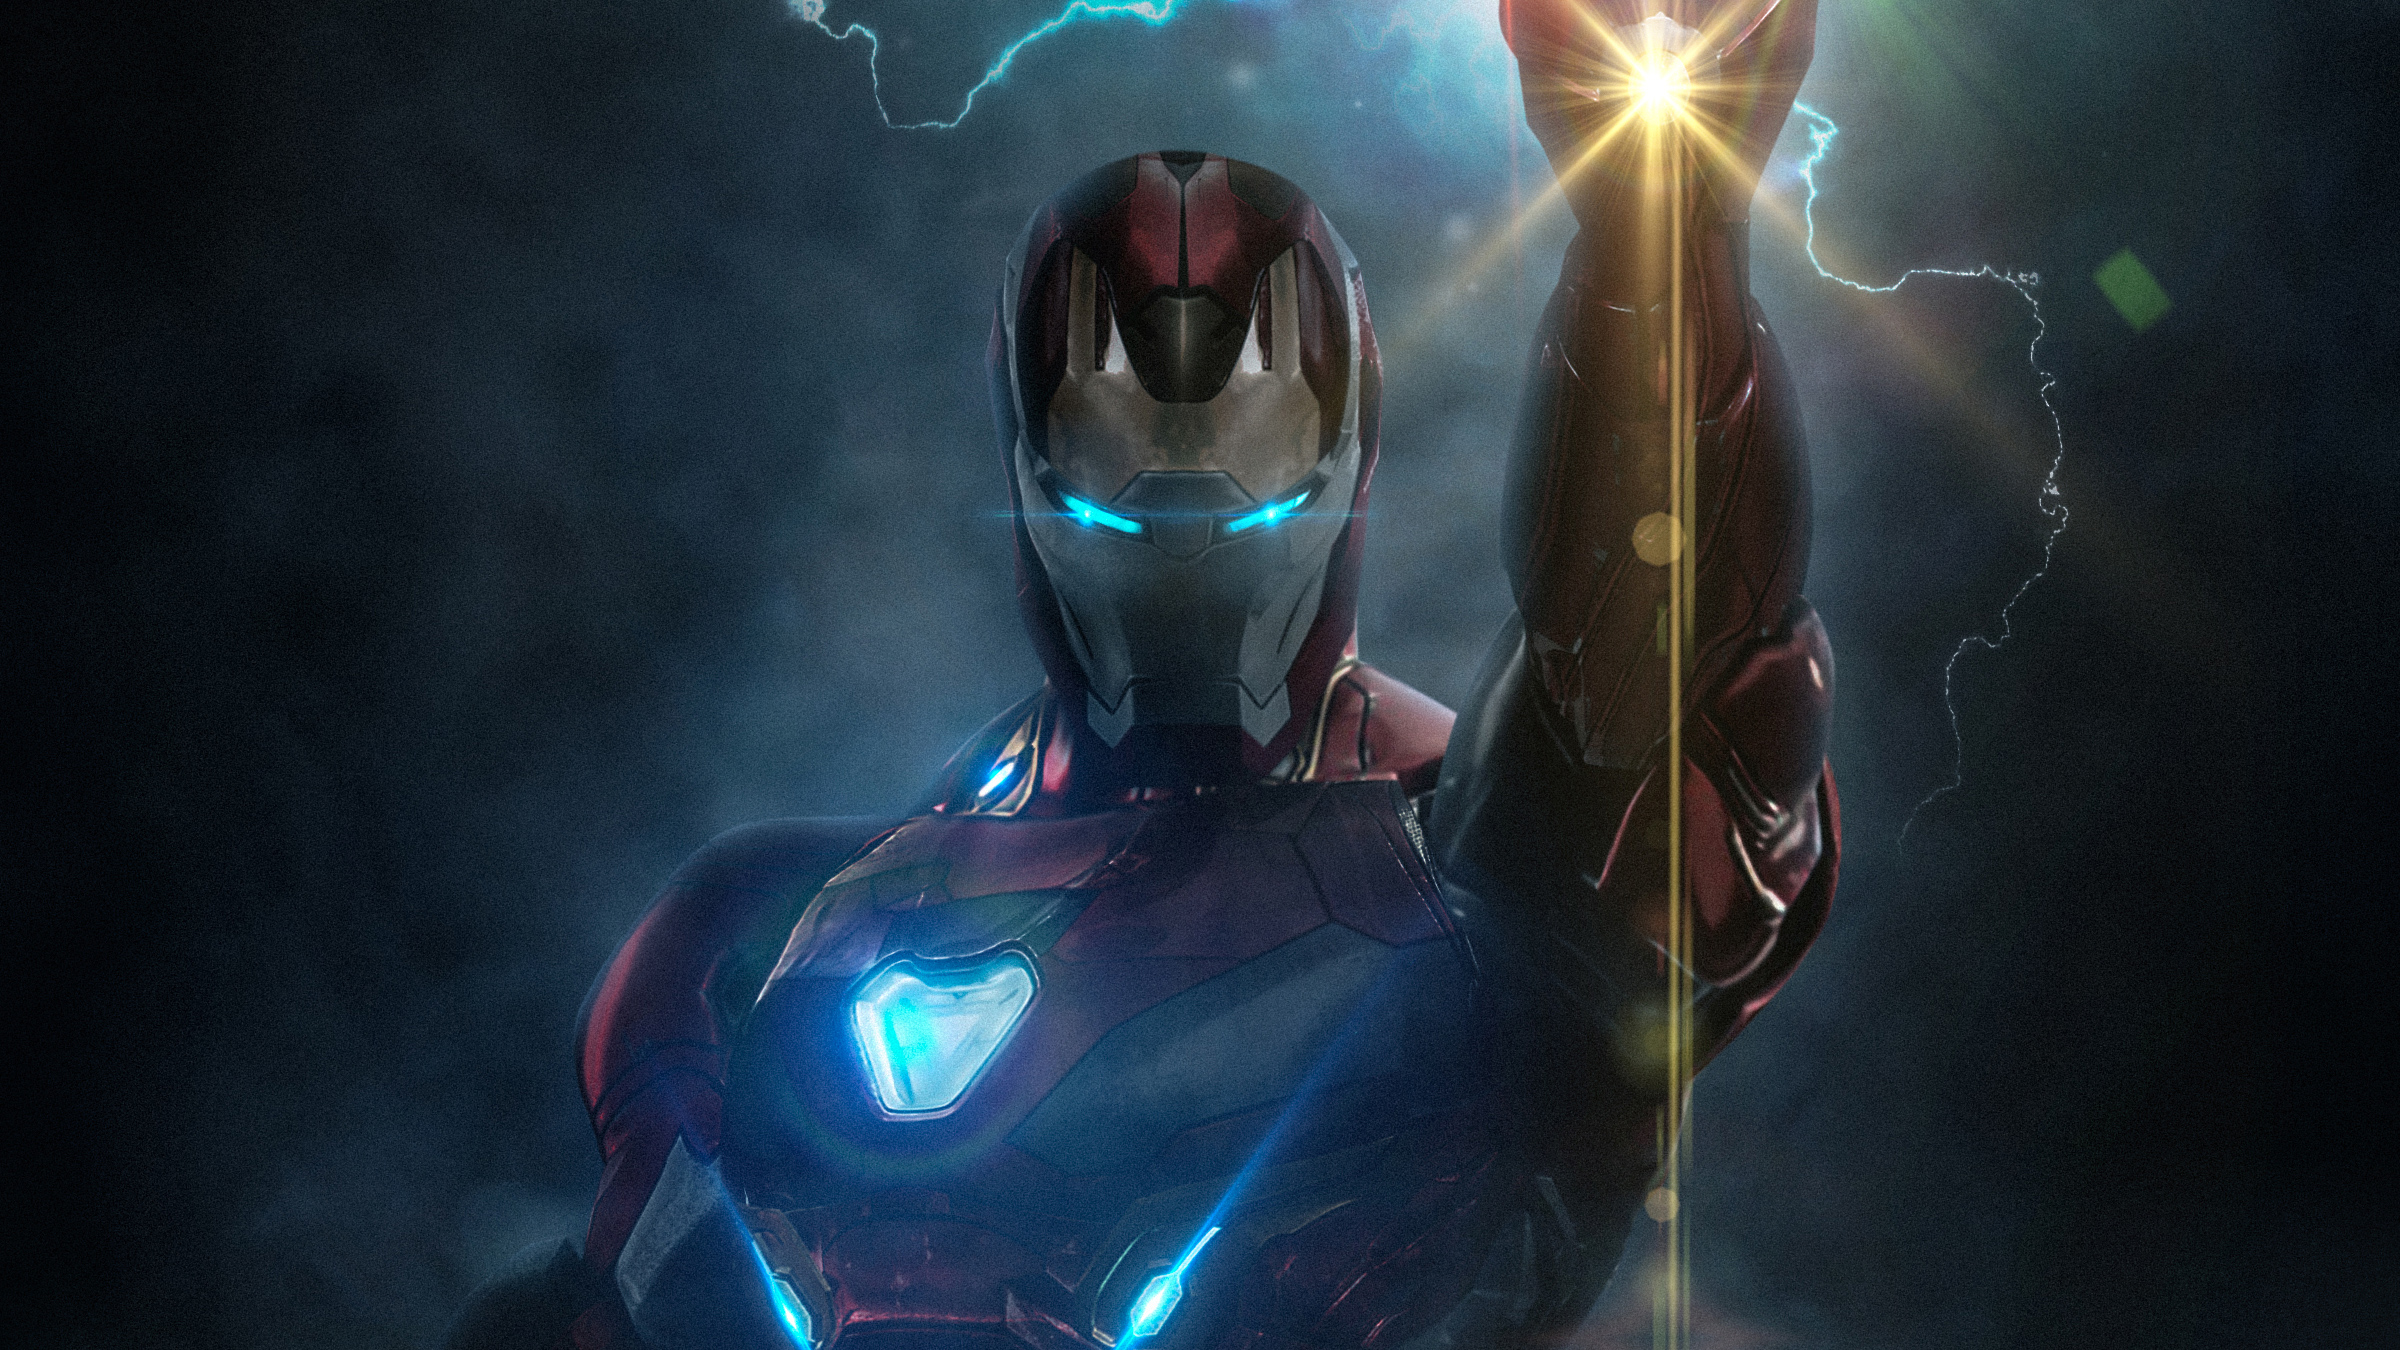 tony stark, iron man, avengers endgame, the avengers, movie Free Stock Photo